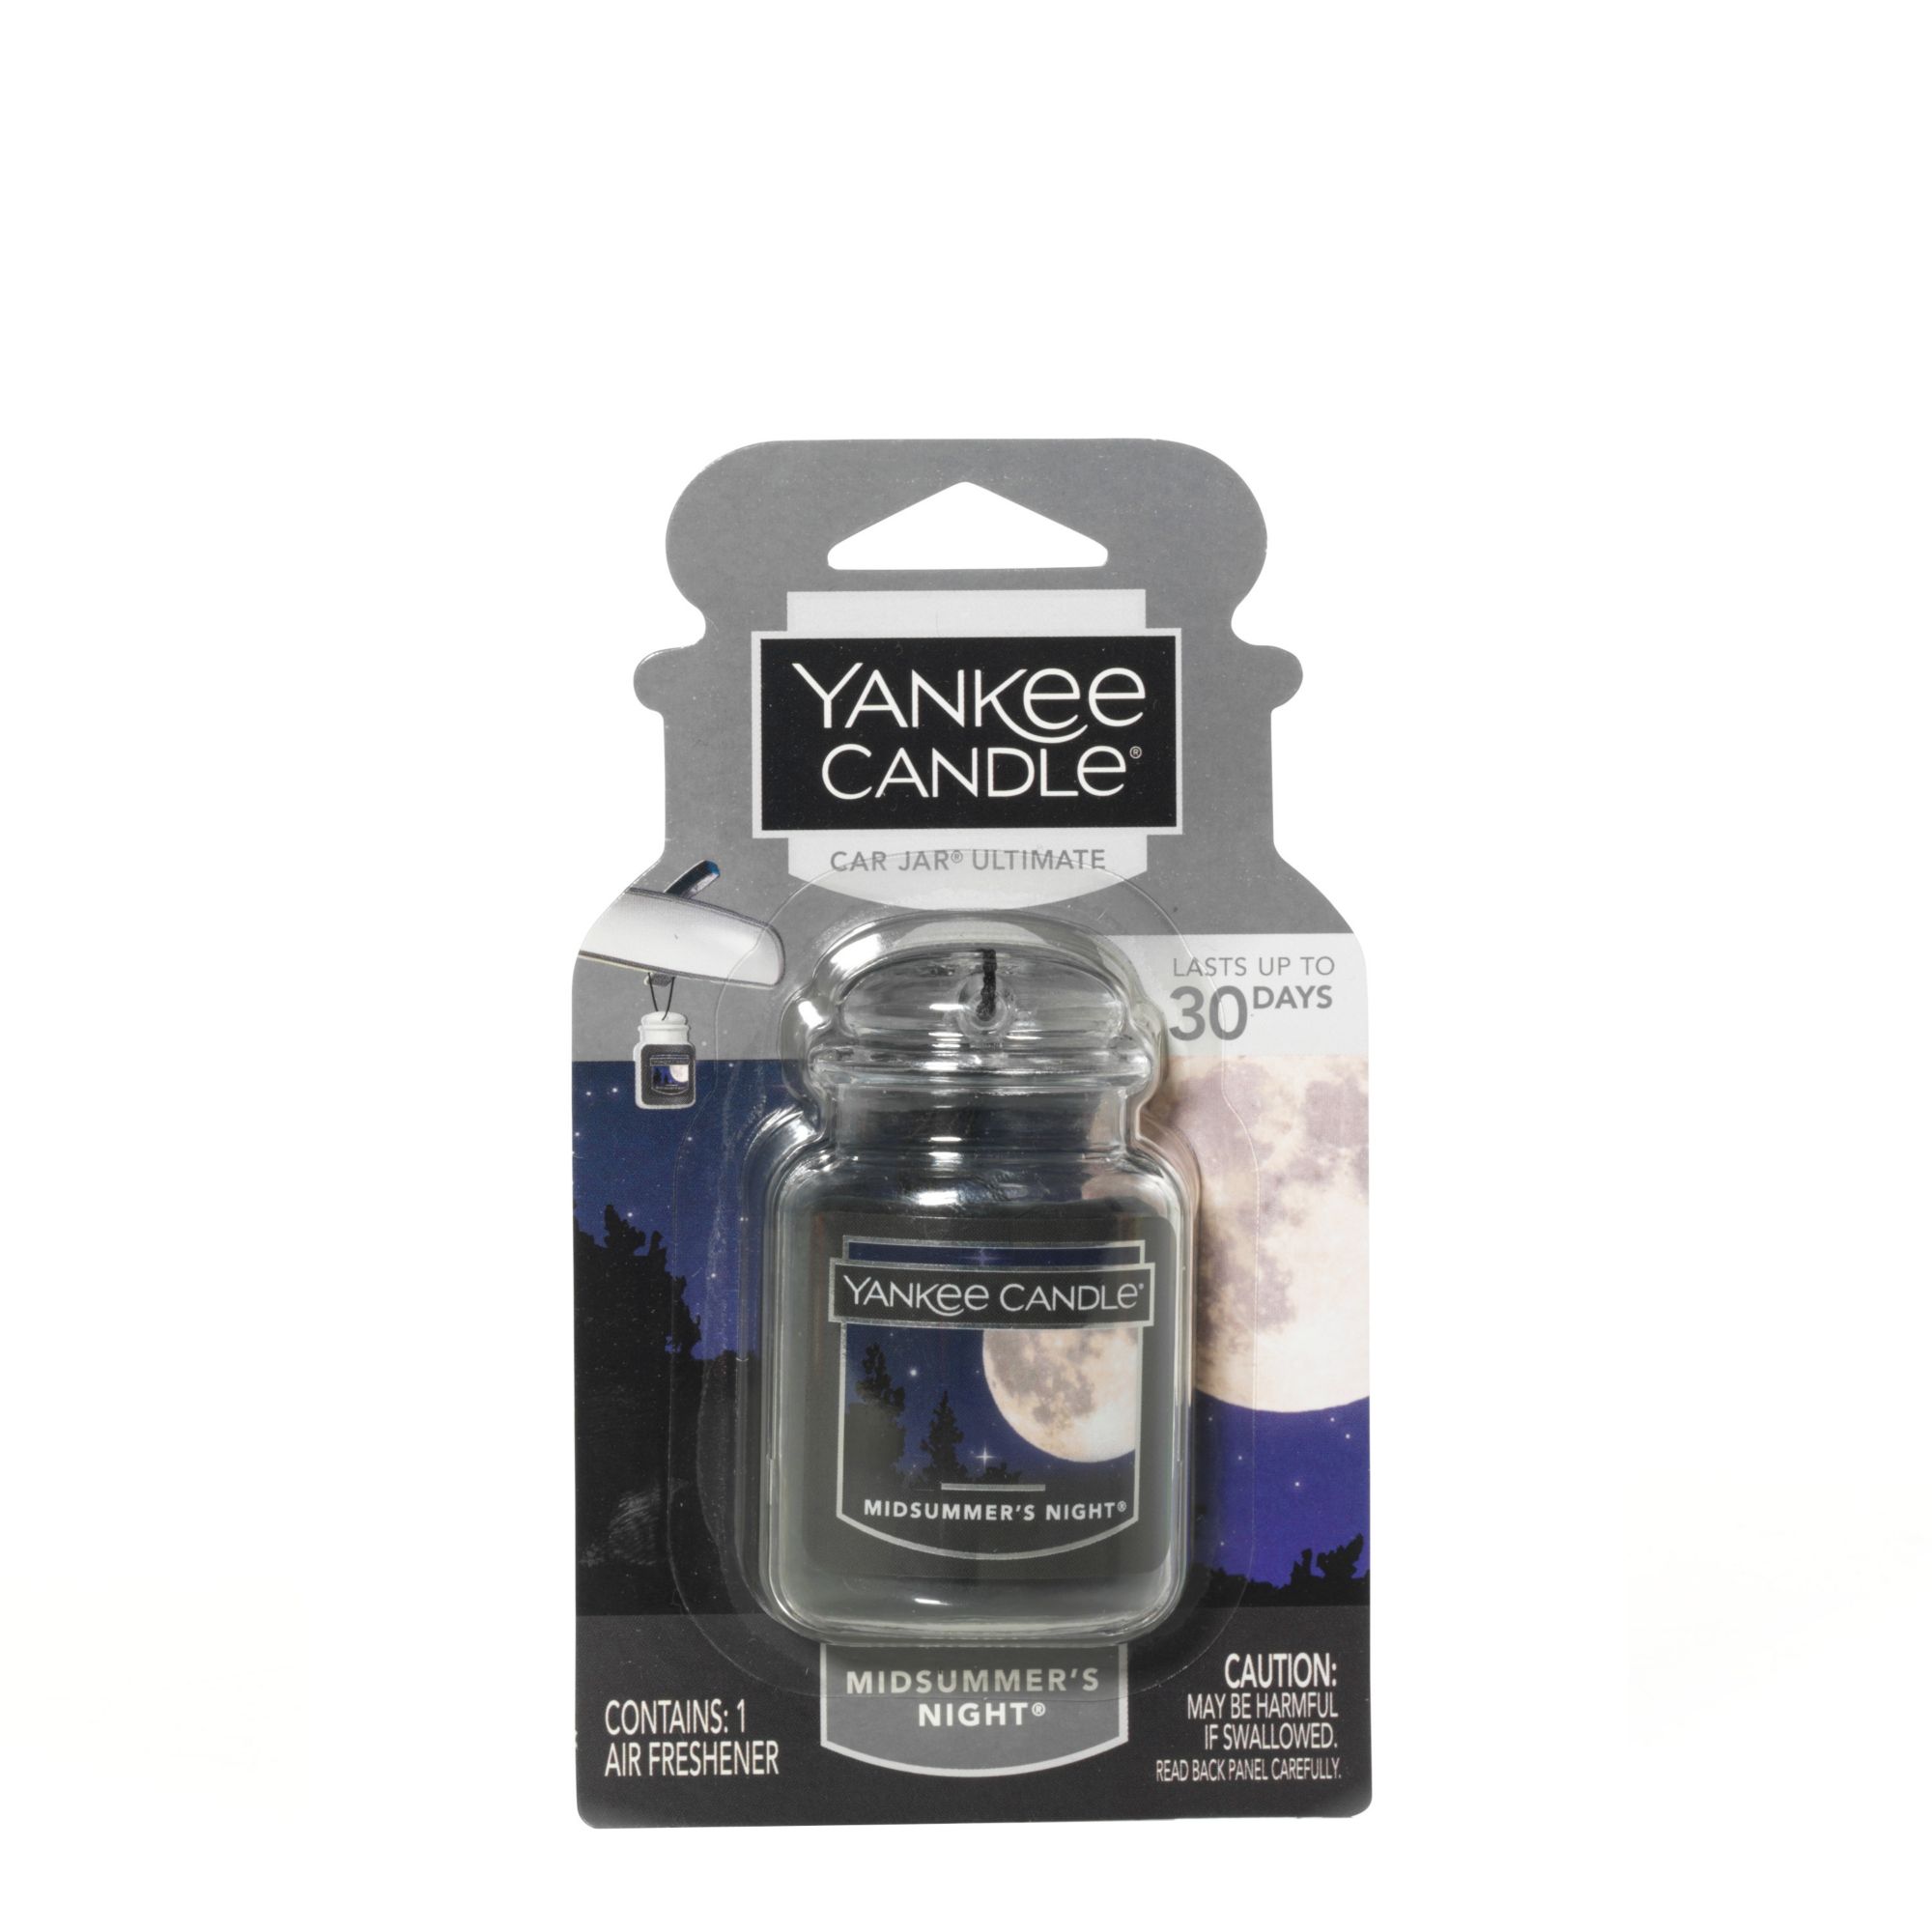 Yankee Candle Car Jar Ultimate Coconut Beach - Diffuseur de parfum